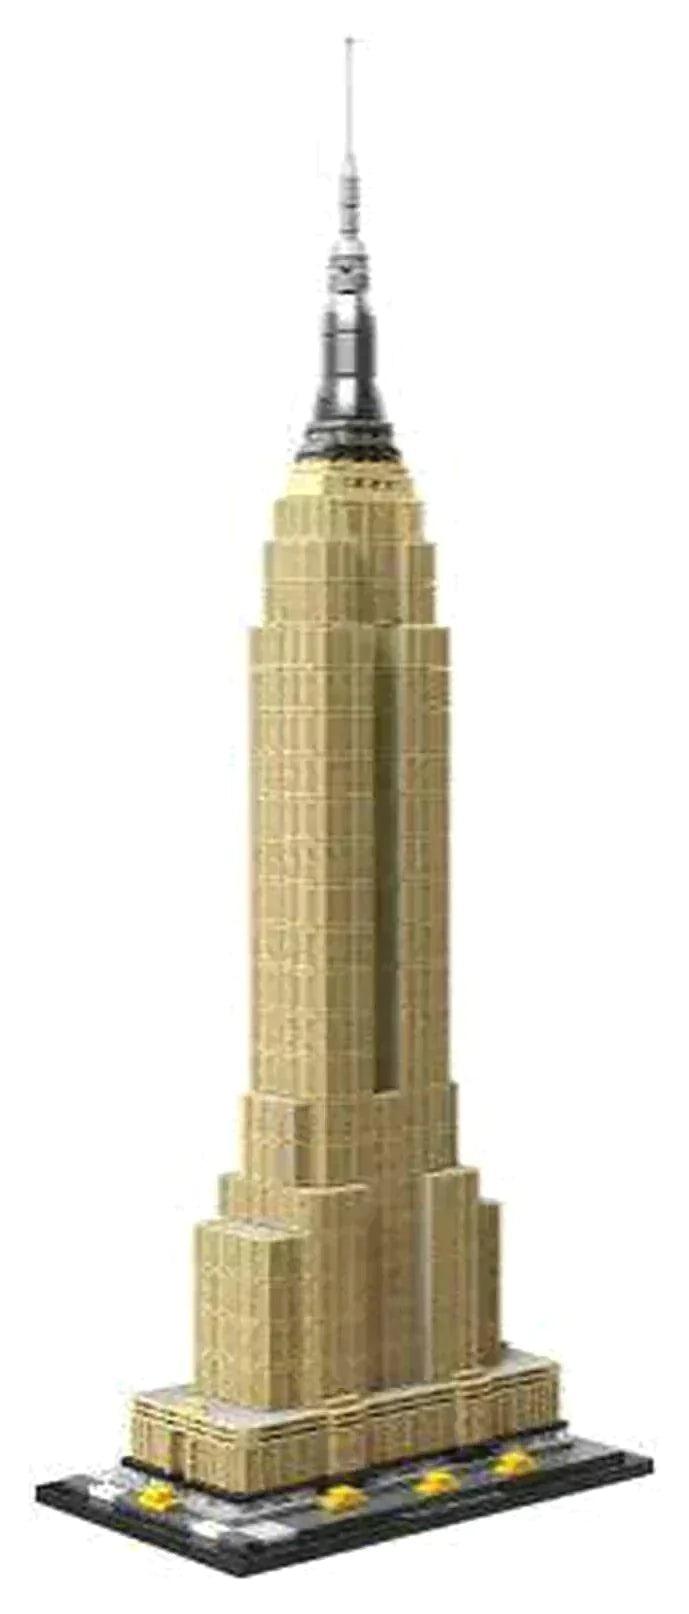 LEGO Empire State Building NewYork Landmark 21046 Architecture LEGO ARCHITECTURE @ 2TTOYS LEGO €. 119.99